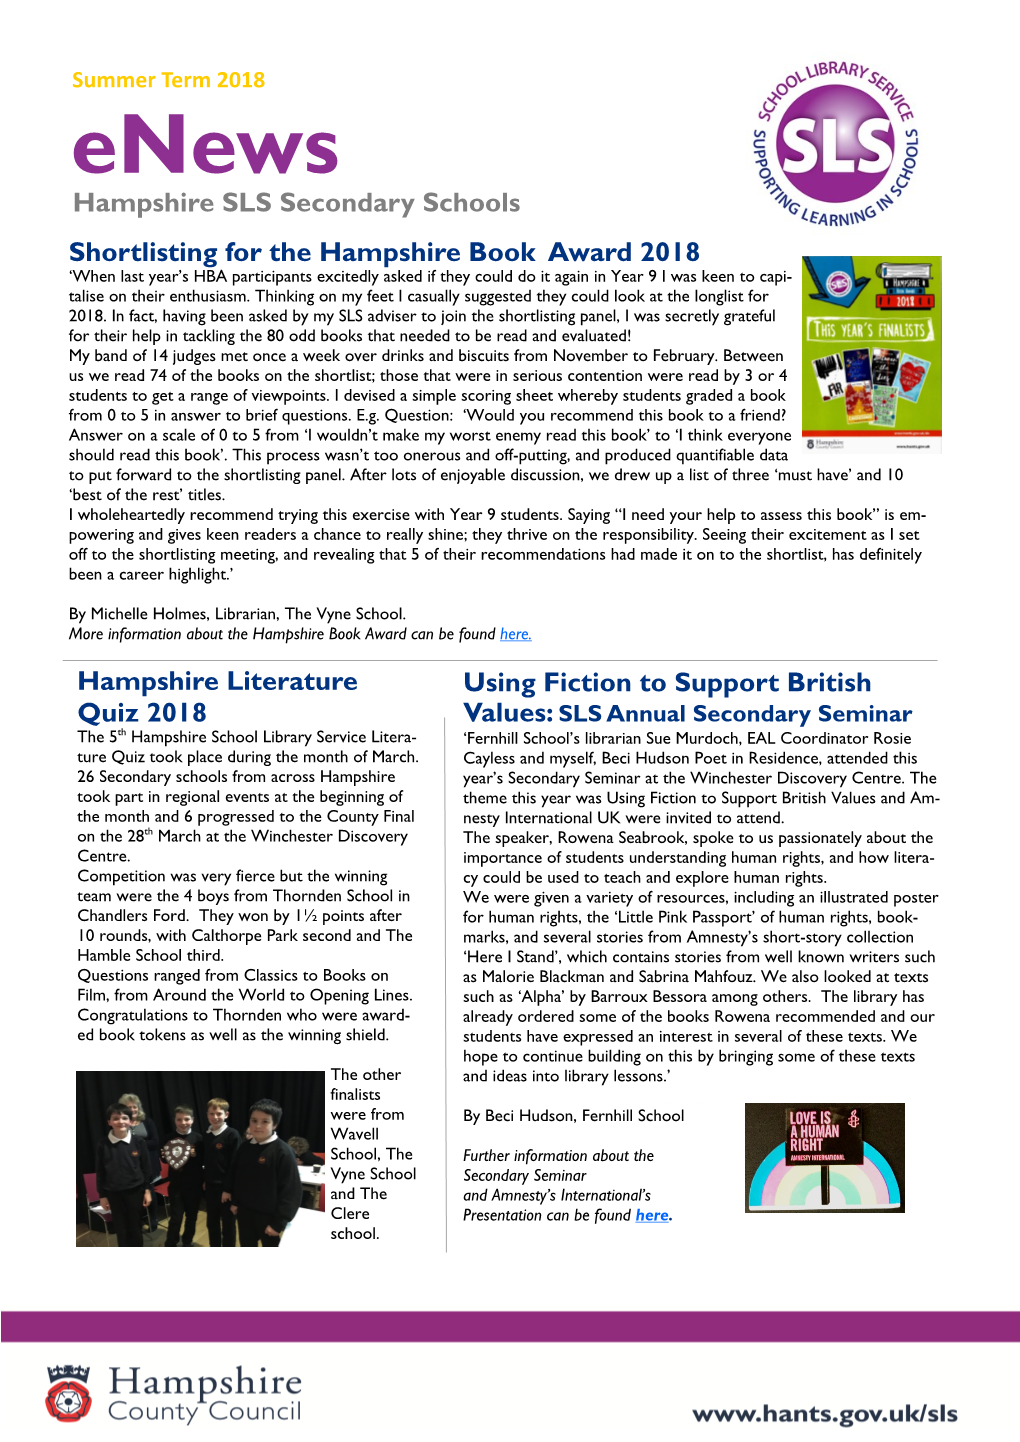 Hampshire SLS Secondary Schools Shortlisting for the Hampshire Book Award 2018 Hampshire Literature Quiz 2018 Using Fiction To